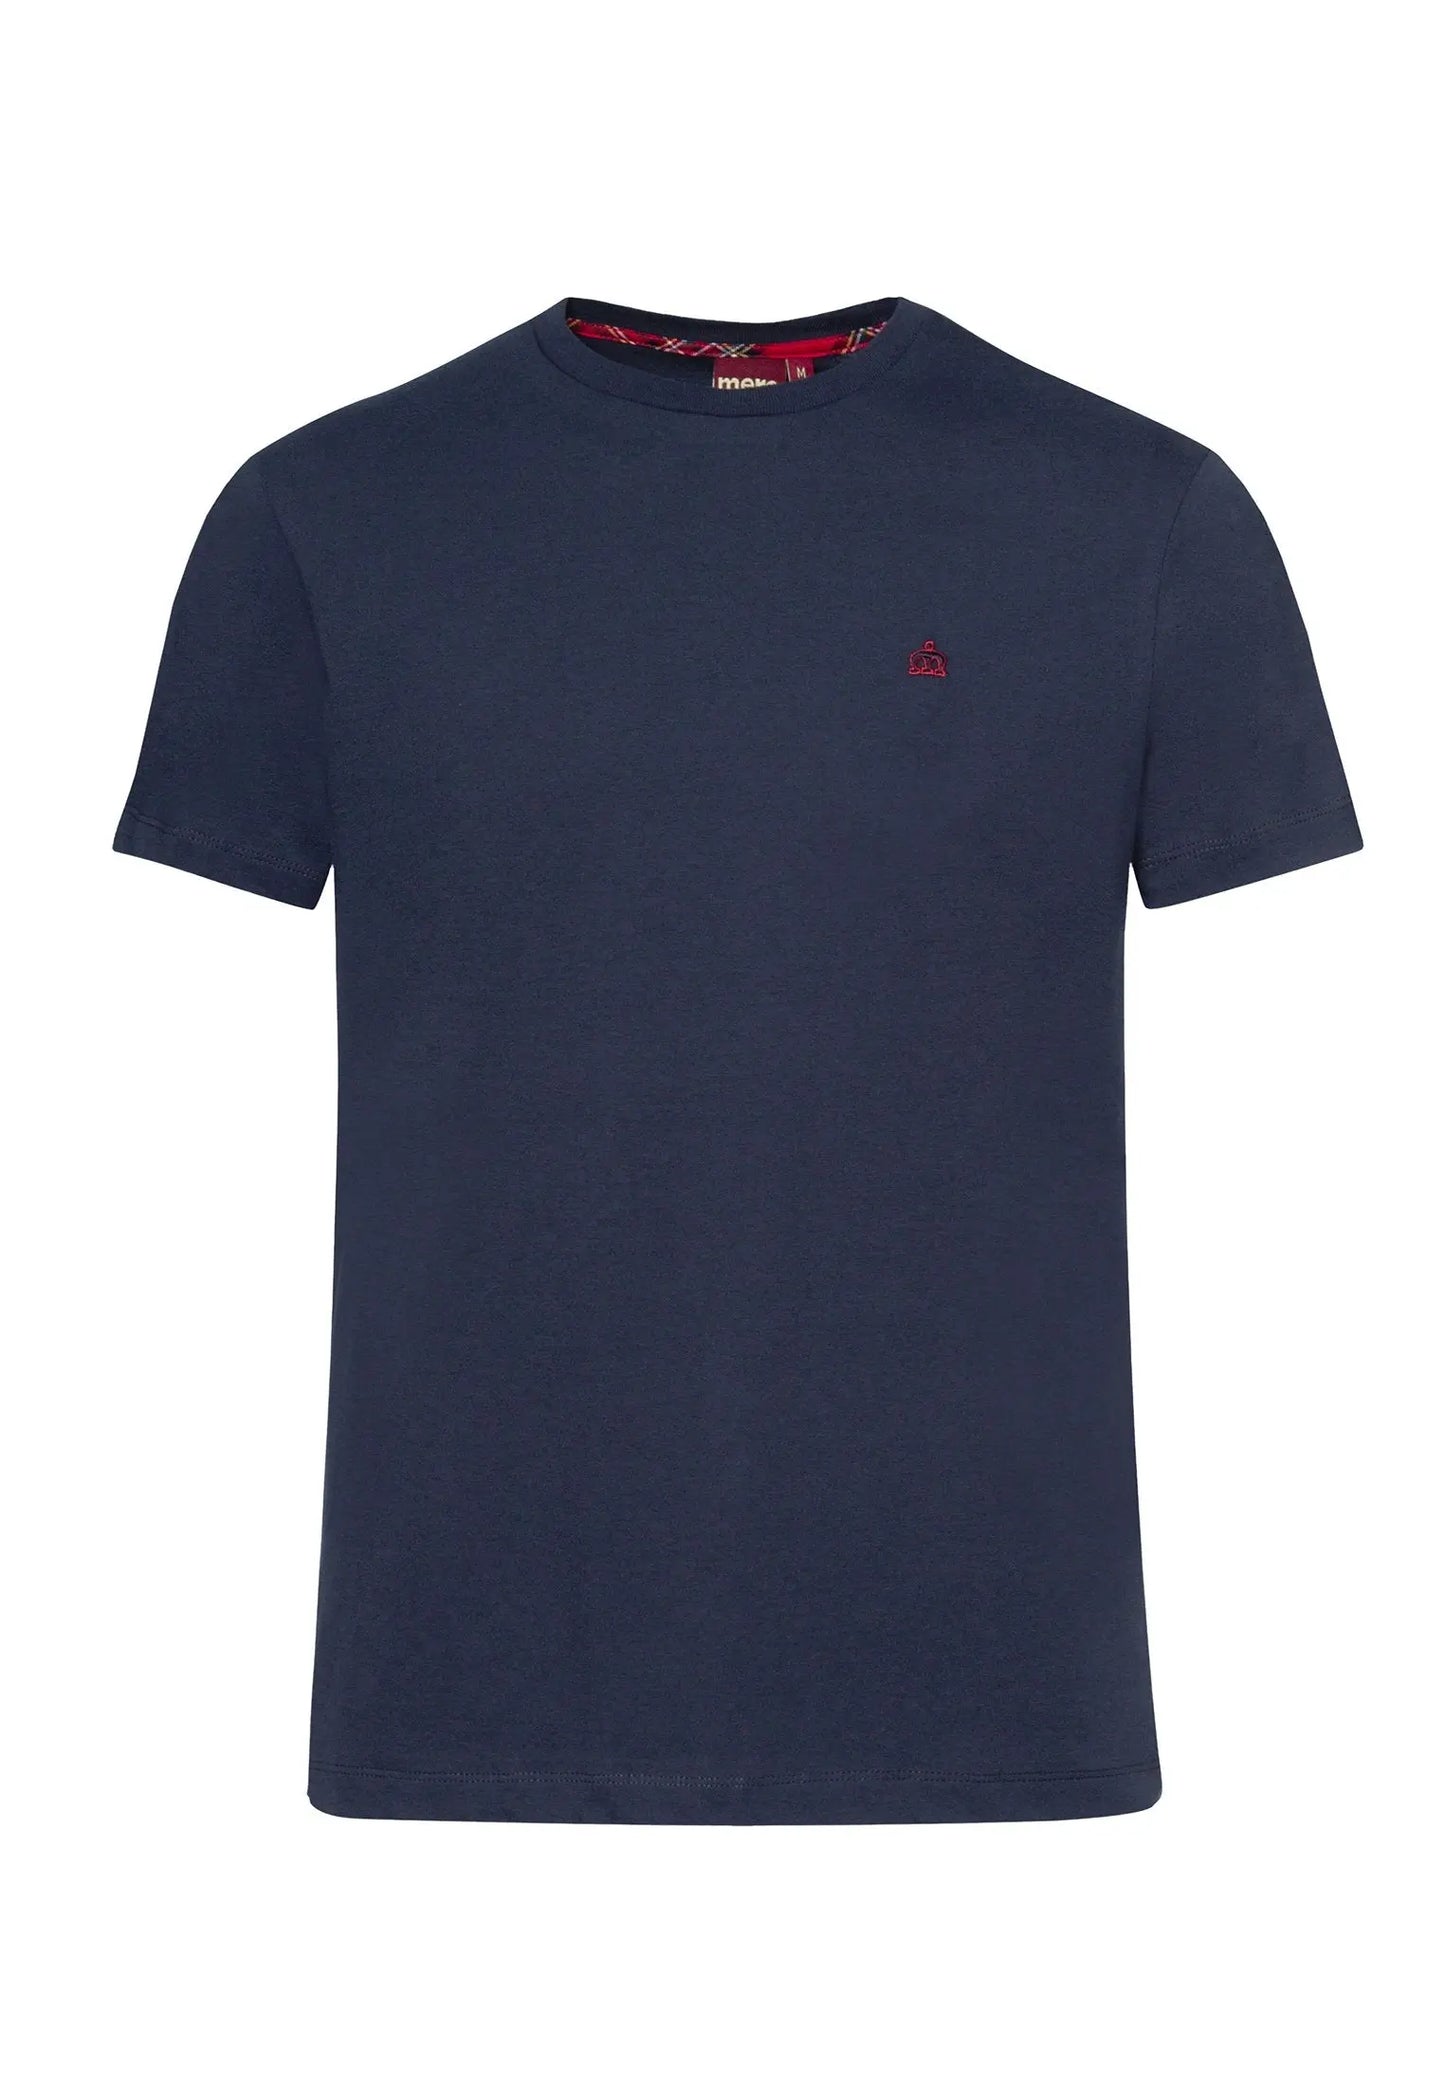 Merc London Keyport T-Shirt - Navy From Woven Durham